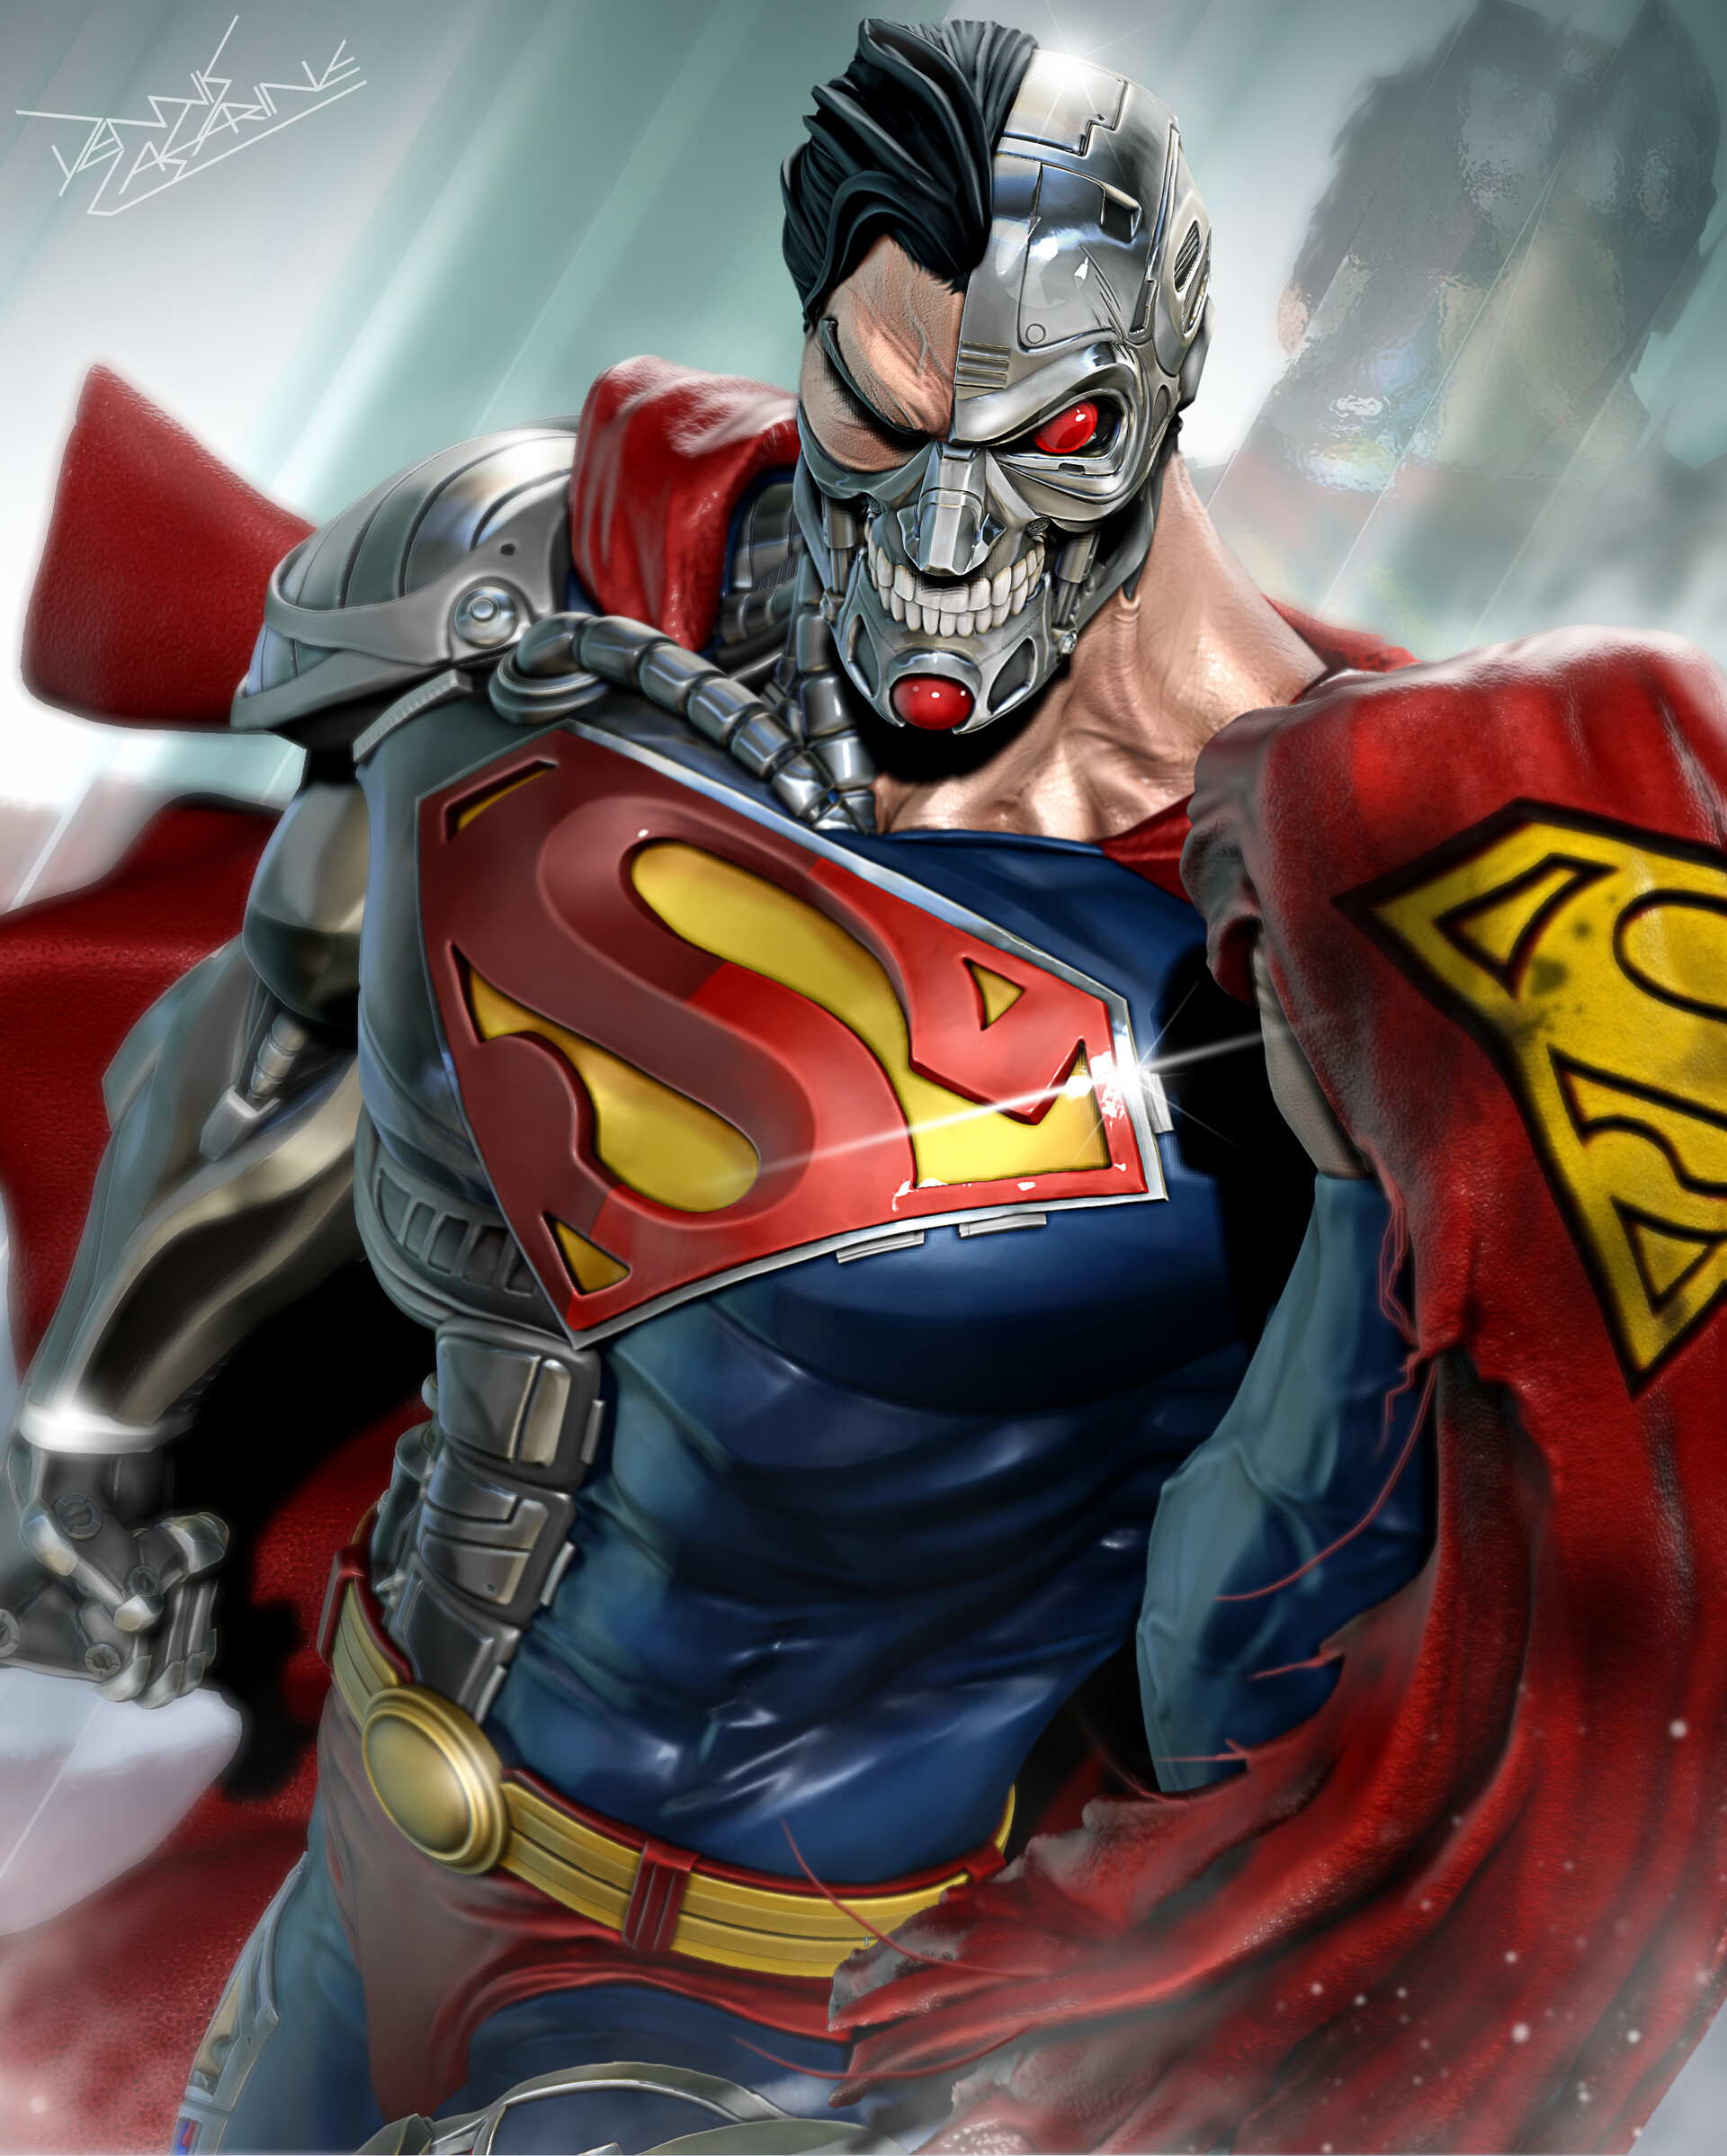 cyborg superman vs green lantern